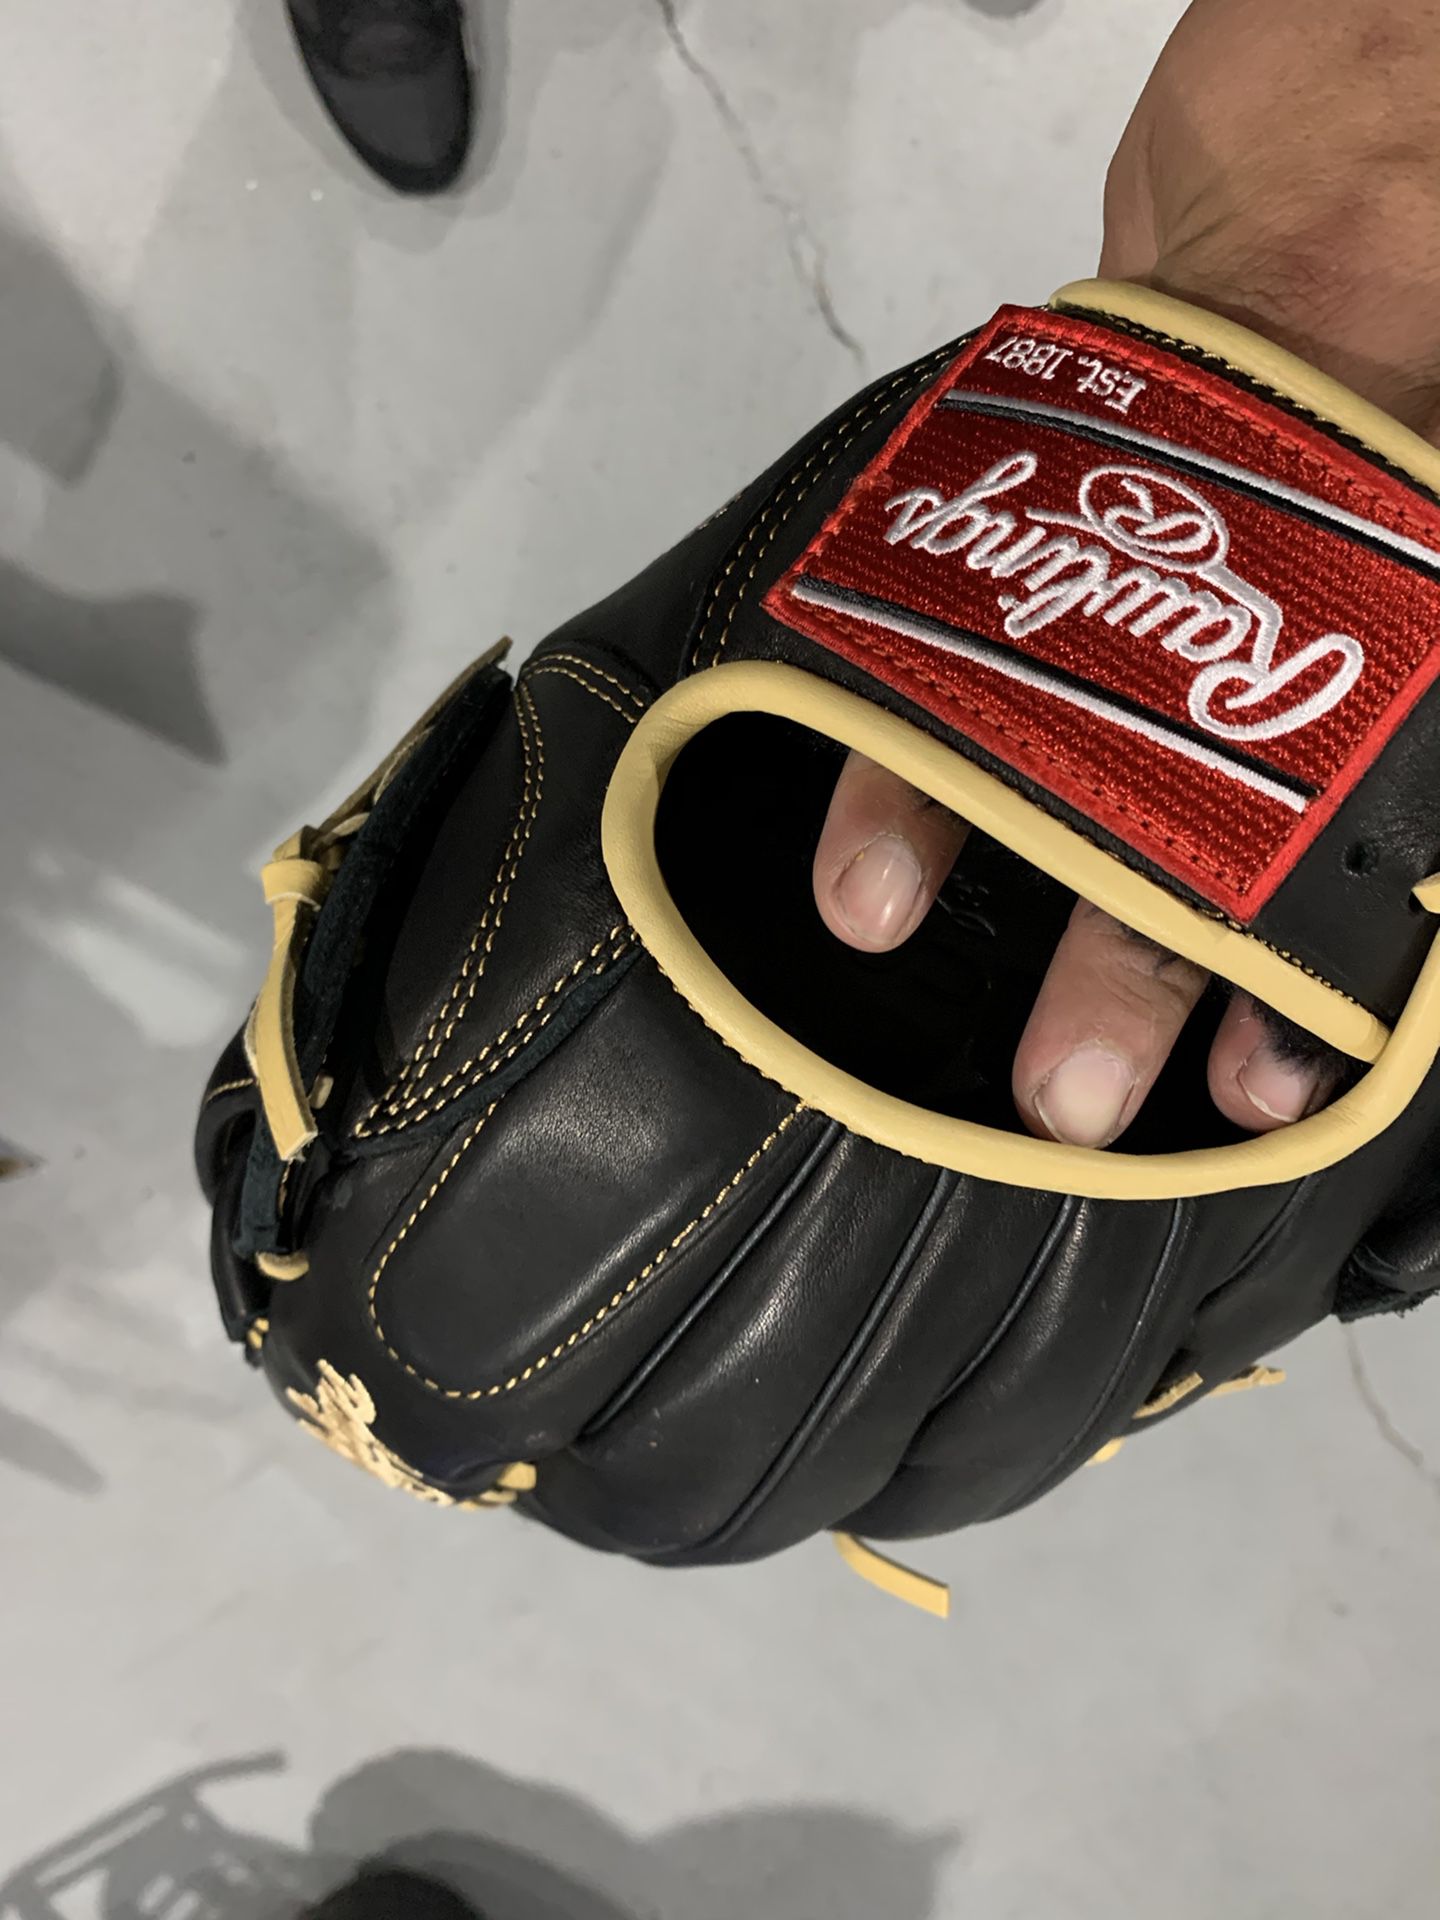 Baseball/Softball glove